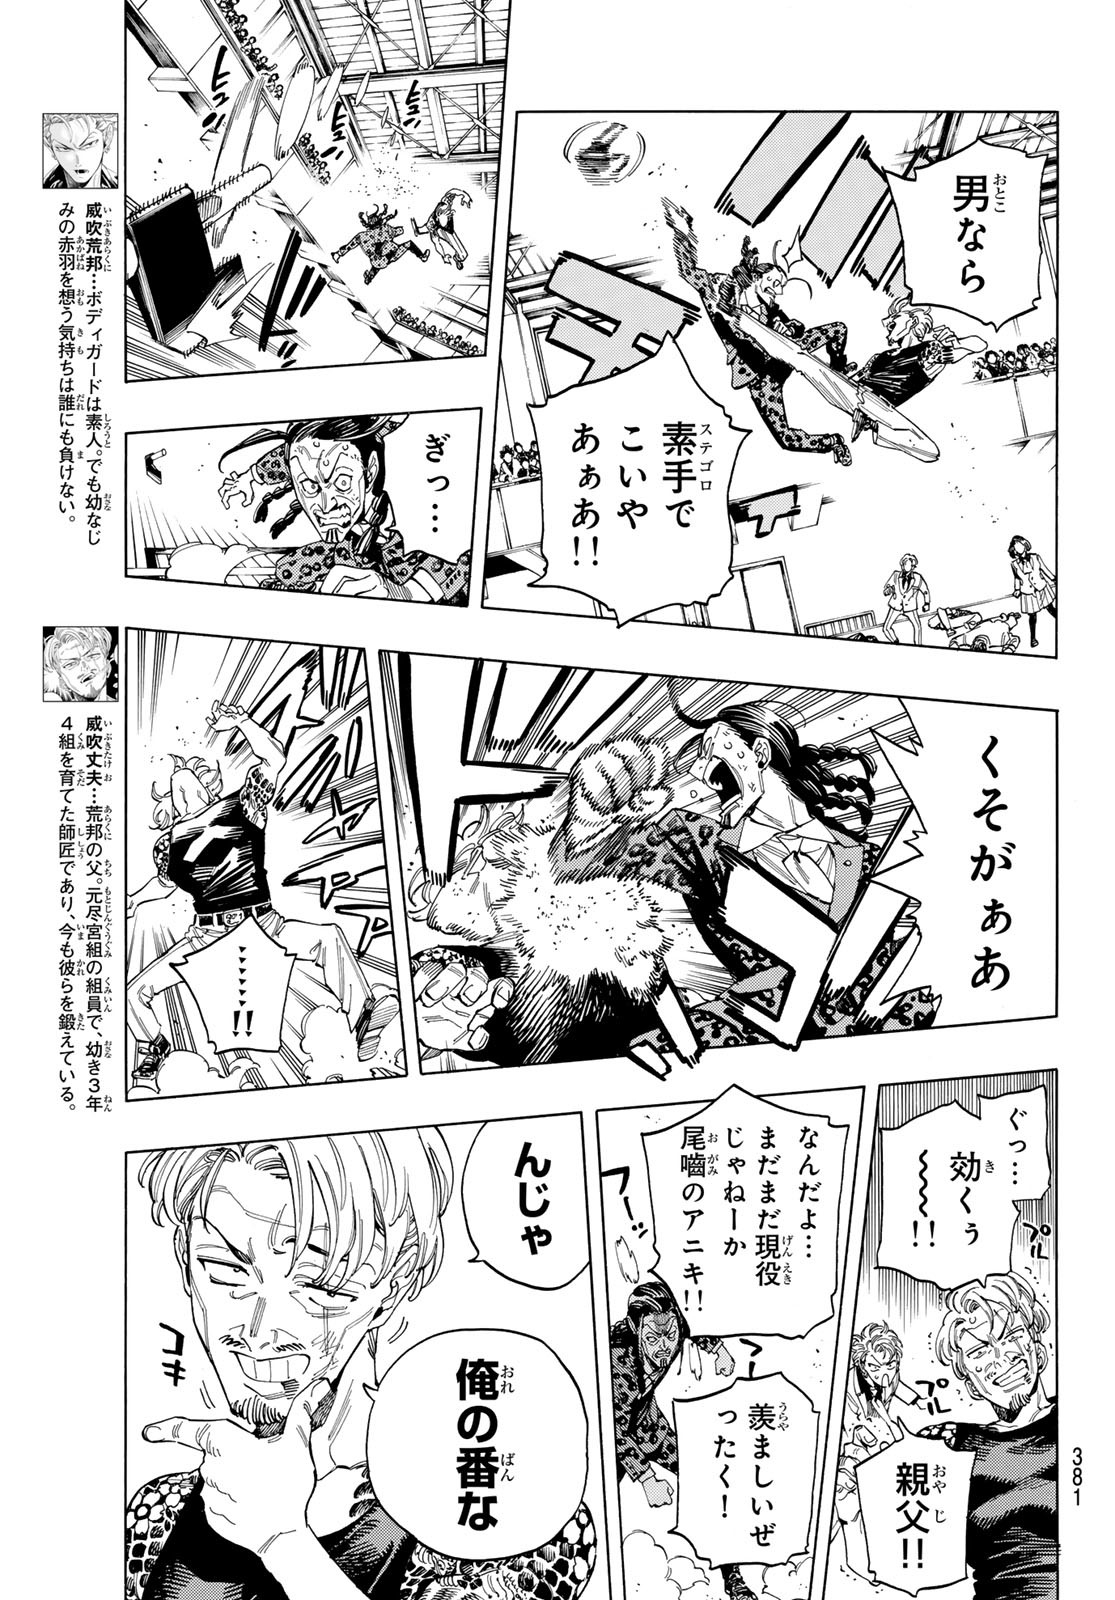 Akabane Honeko no Bodyguard - Chapter 63 - Page 3